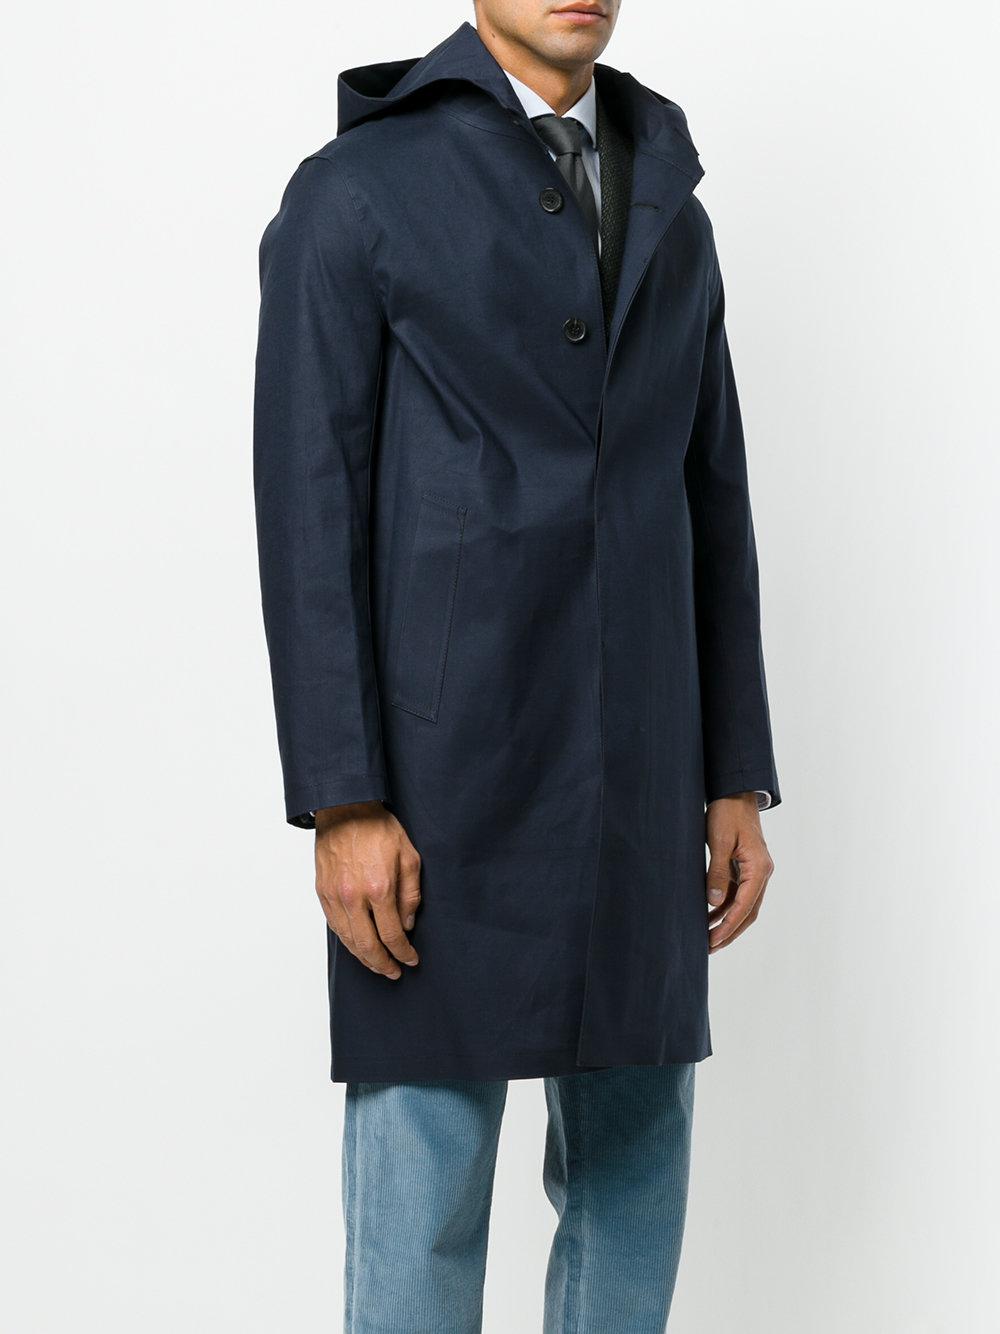 Lyst - Mackintosh Hooded Raincoat in Blue for Men